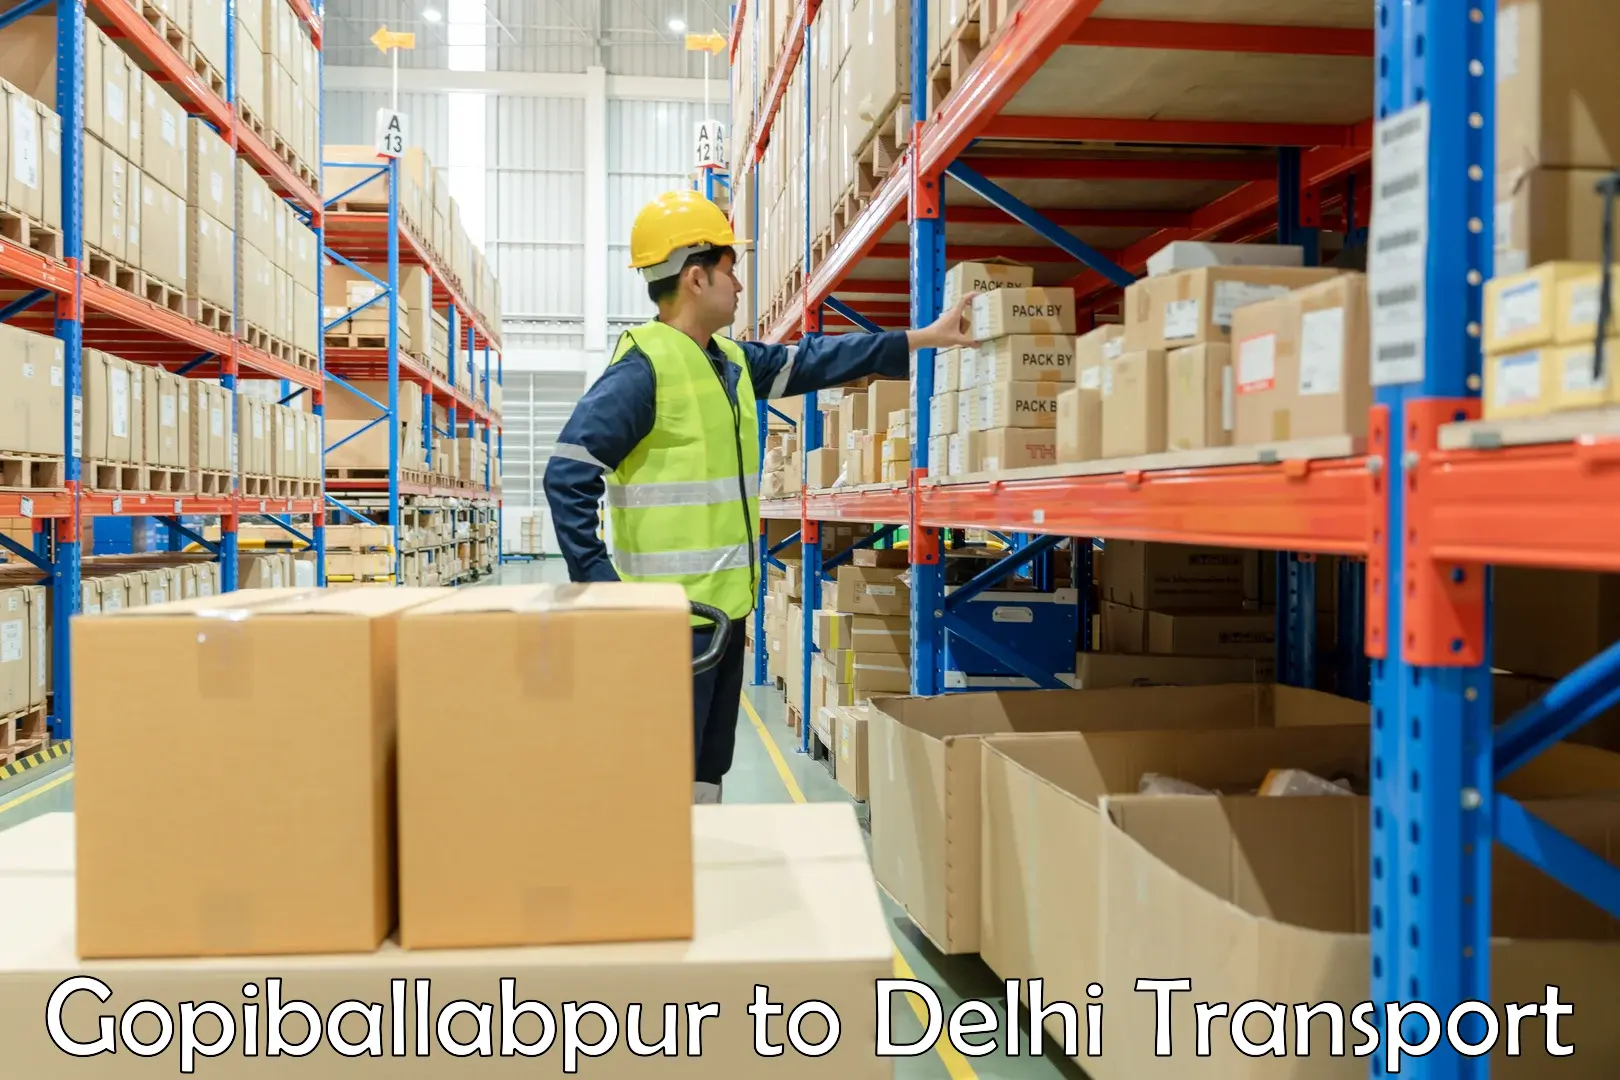 Nationwide transport services Gopiballabpur to East Delhi